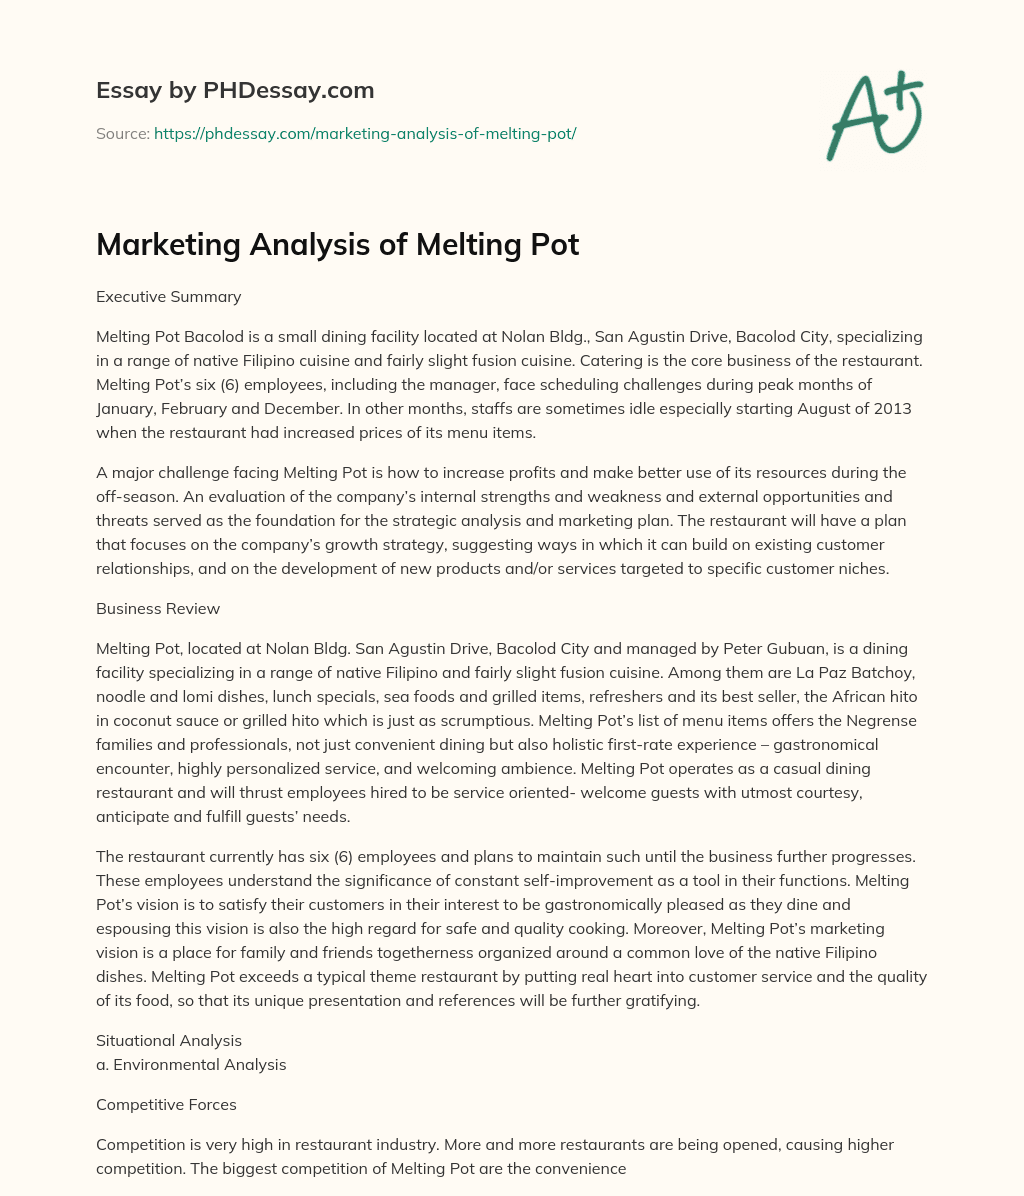 Marketing Analysis of Melting Pot essay